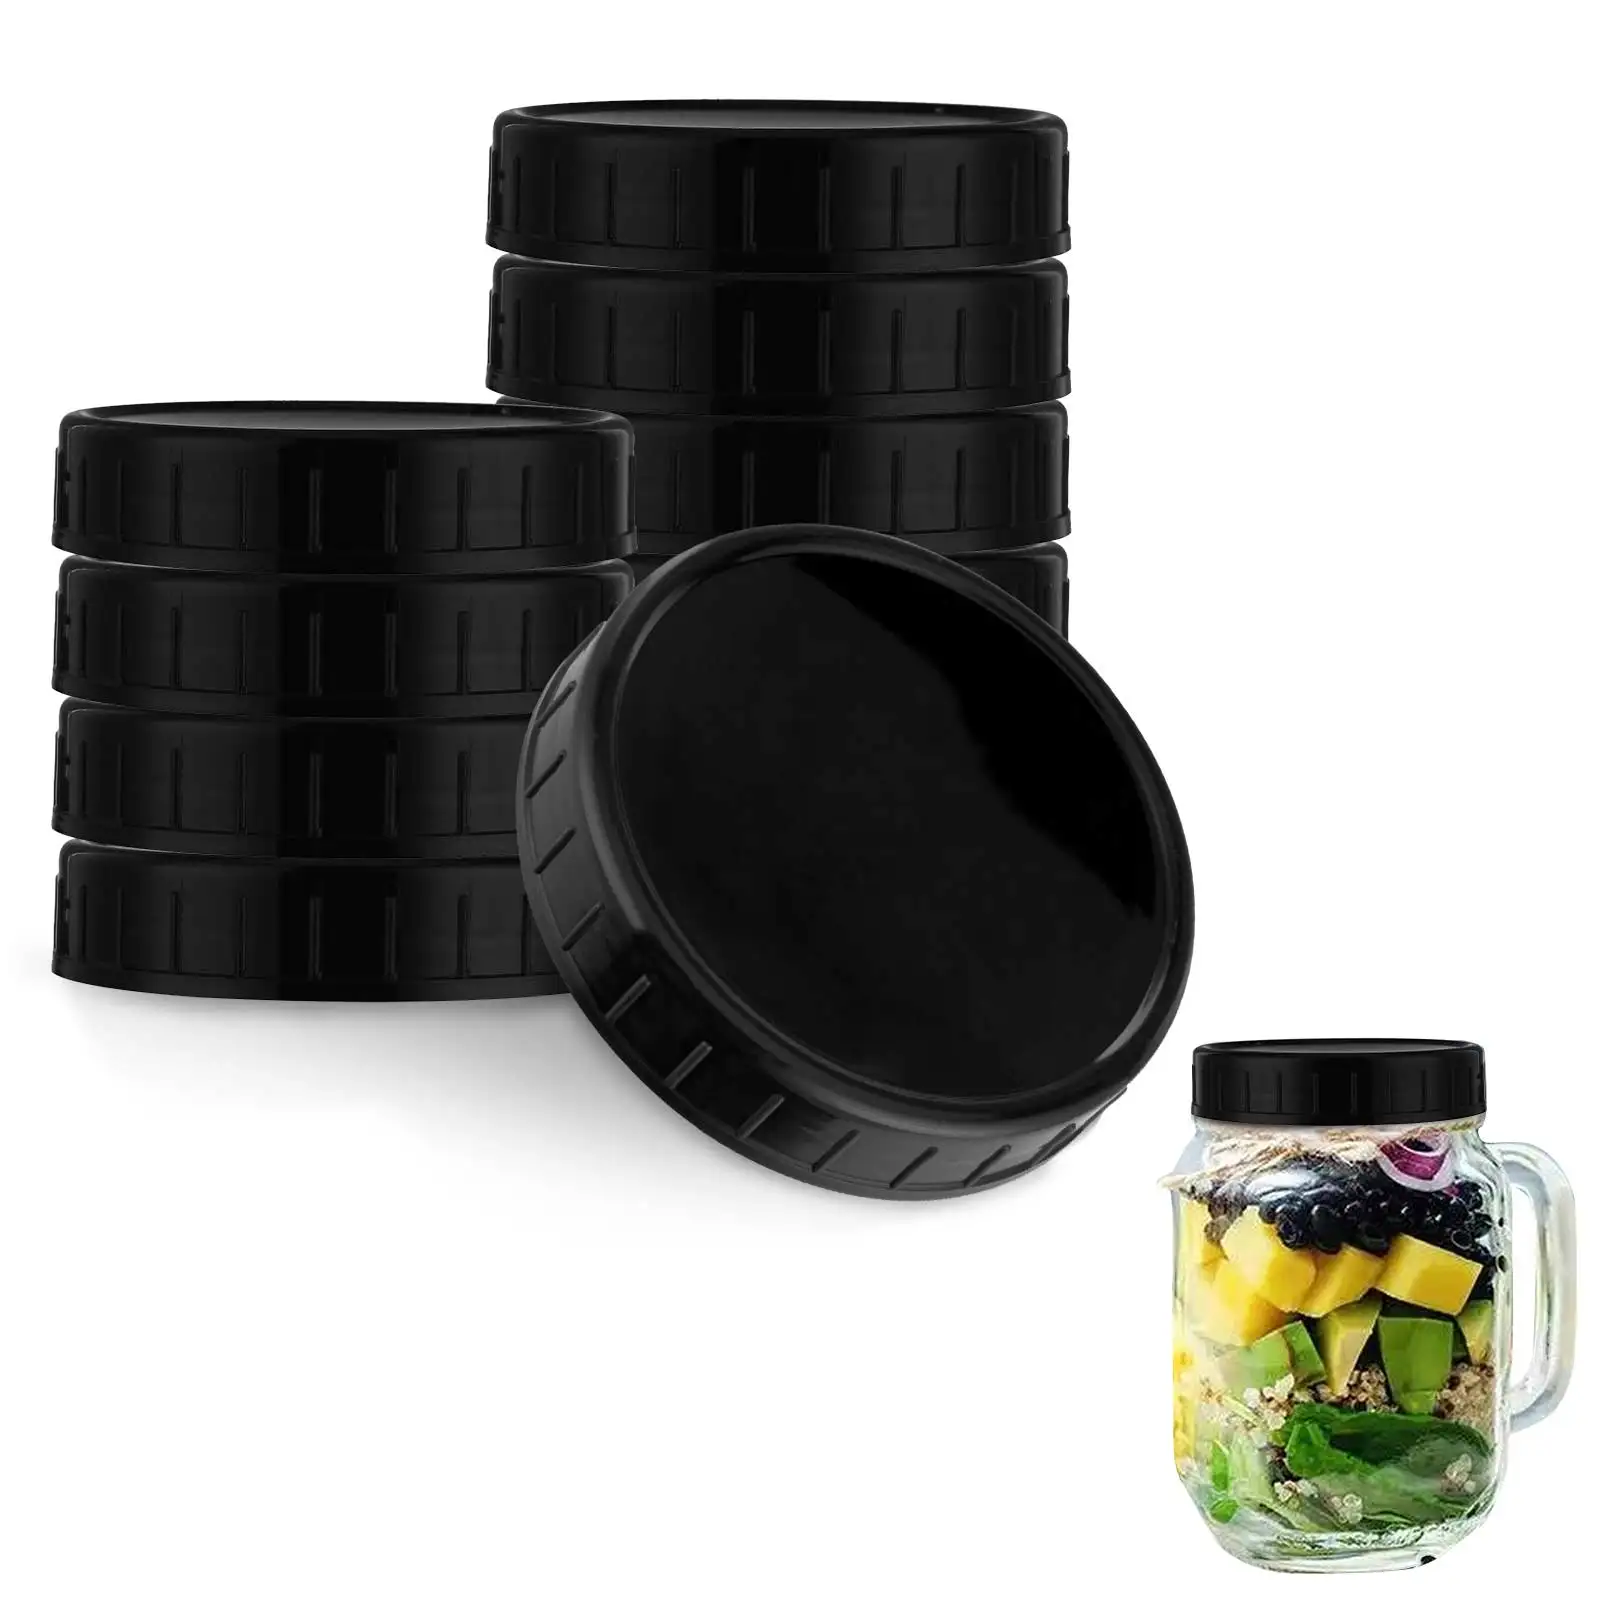 https://ae01.alicdn.com/kf/S1067f5634ff34203bbccd263e5274689E/8pcs-Reusable-Plastic-Cover-Wide-Mouth-86mm-Canning-Jar-Lids-Black-PP-Easy-To-Use-Versatile.jpg